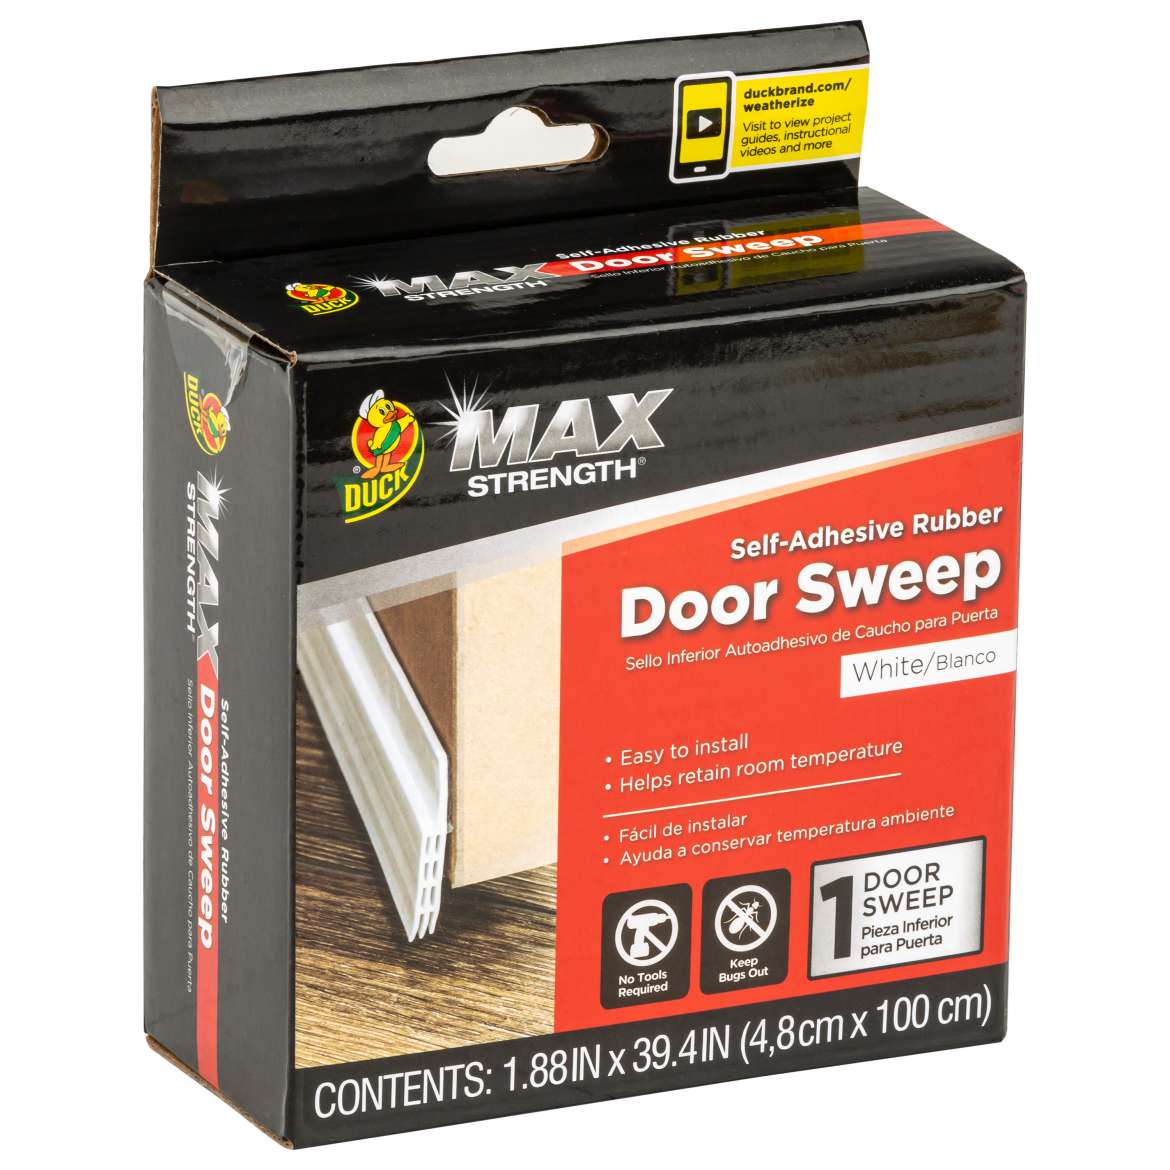 Duck Max Self-Adhesive Rubber Door Bottom - White, 1.88 in. x 39.4 in.